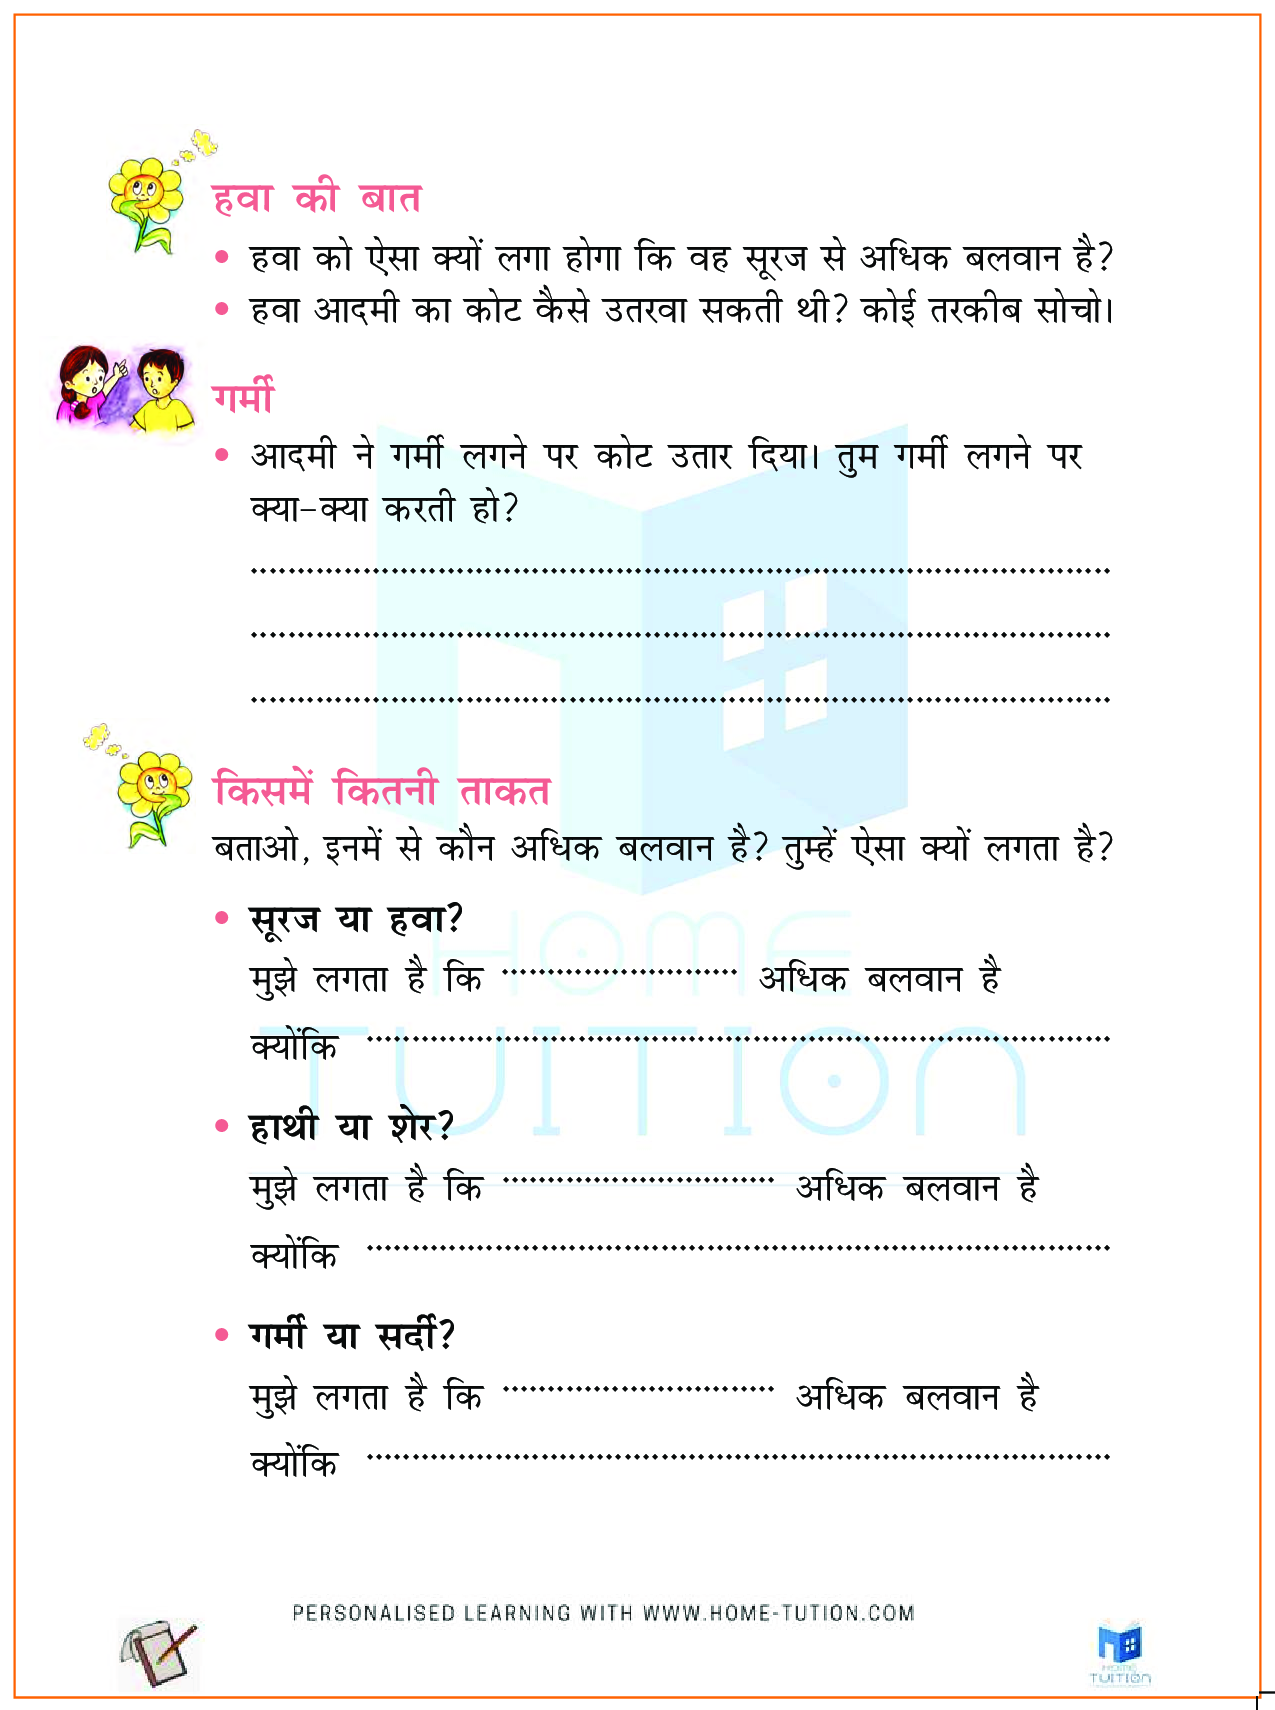 NCERT Solutions for Class 2 Hindi अधिक बलवान कौन?